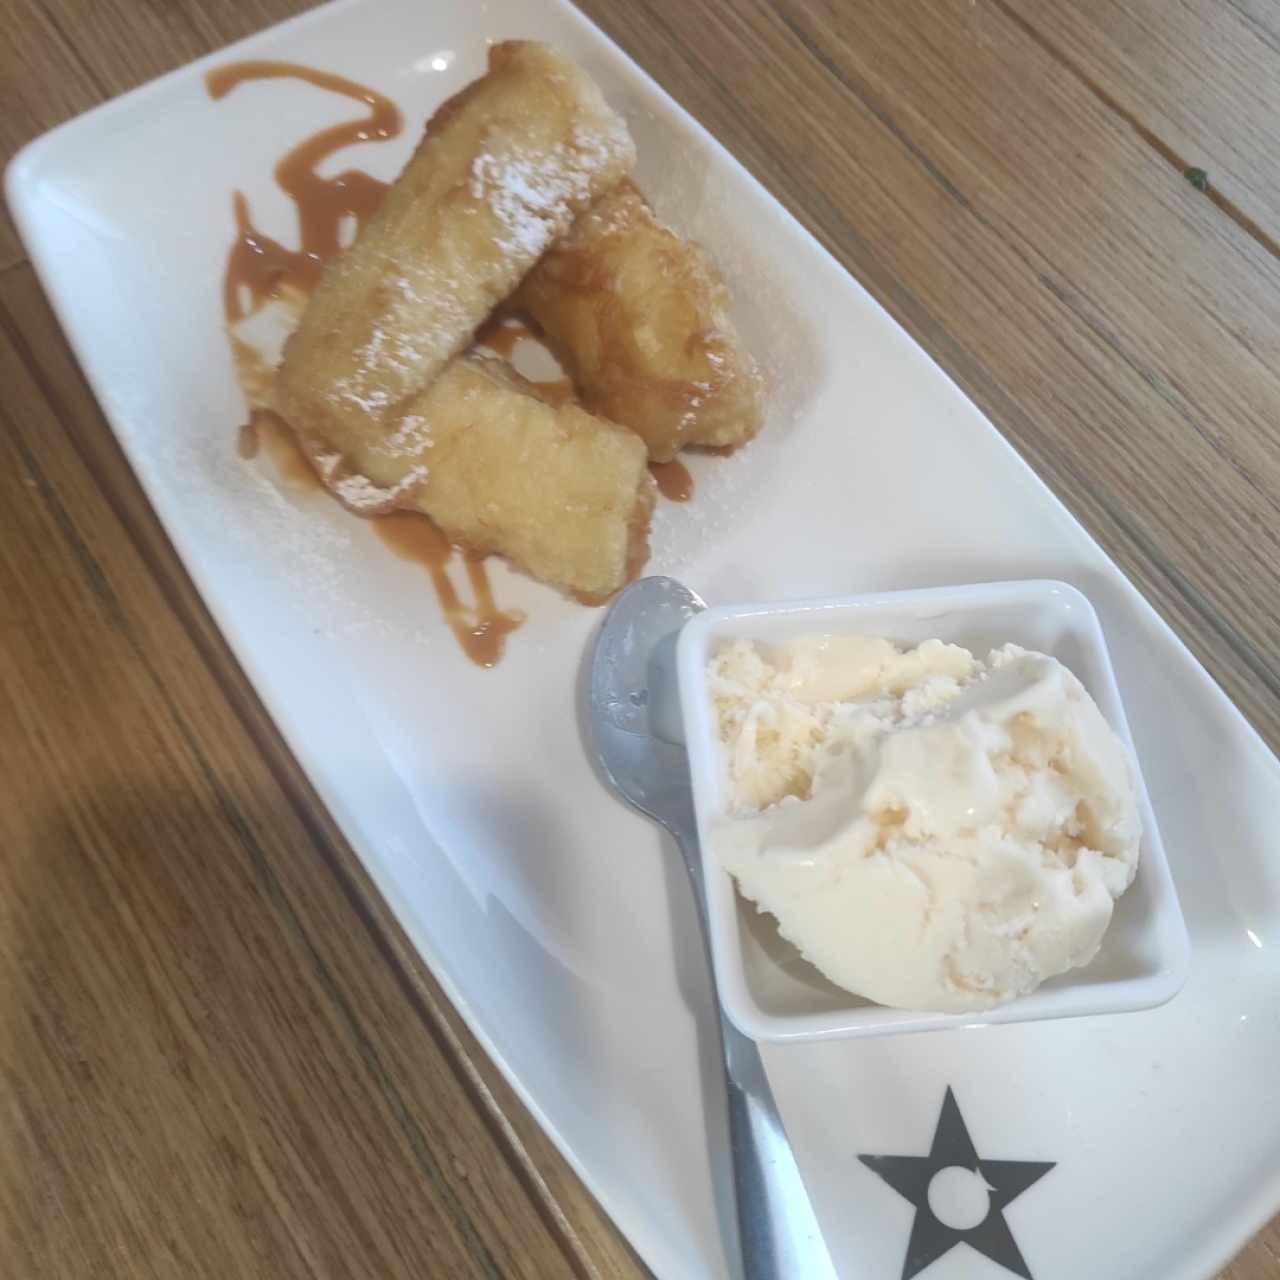 Banana tempura